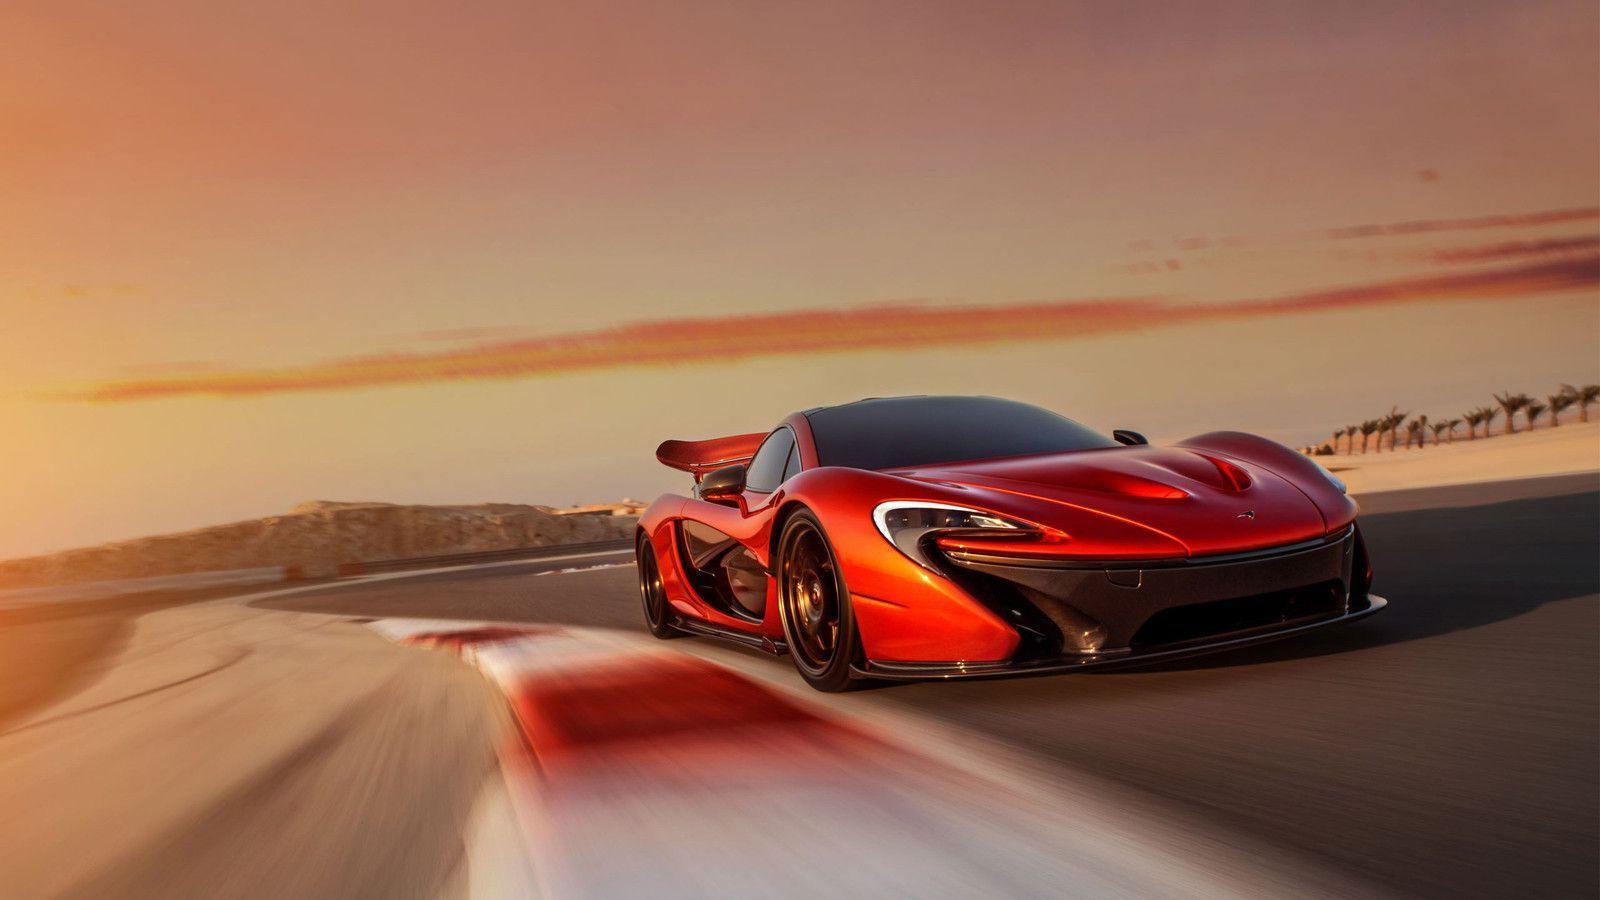 McLaren supercar wallpaper download 49668